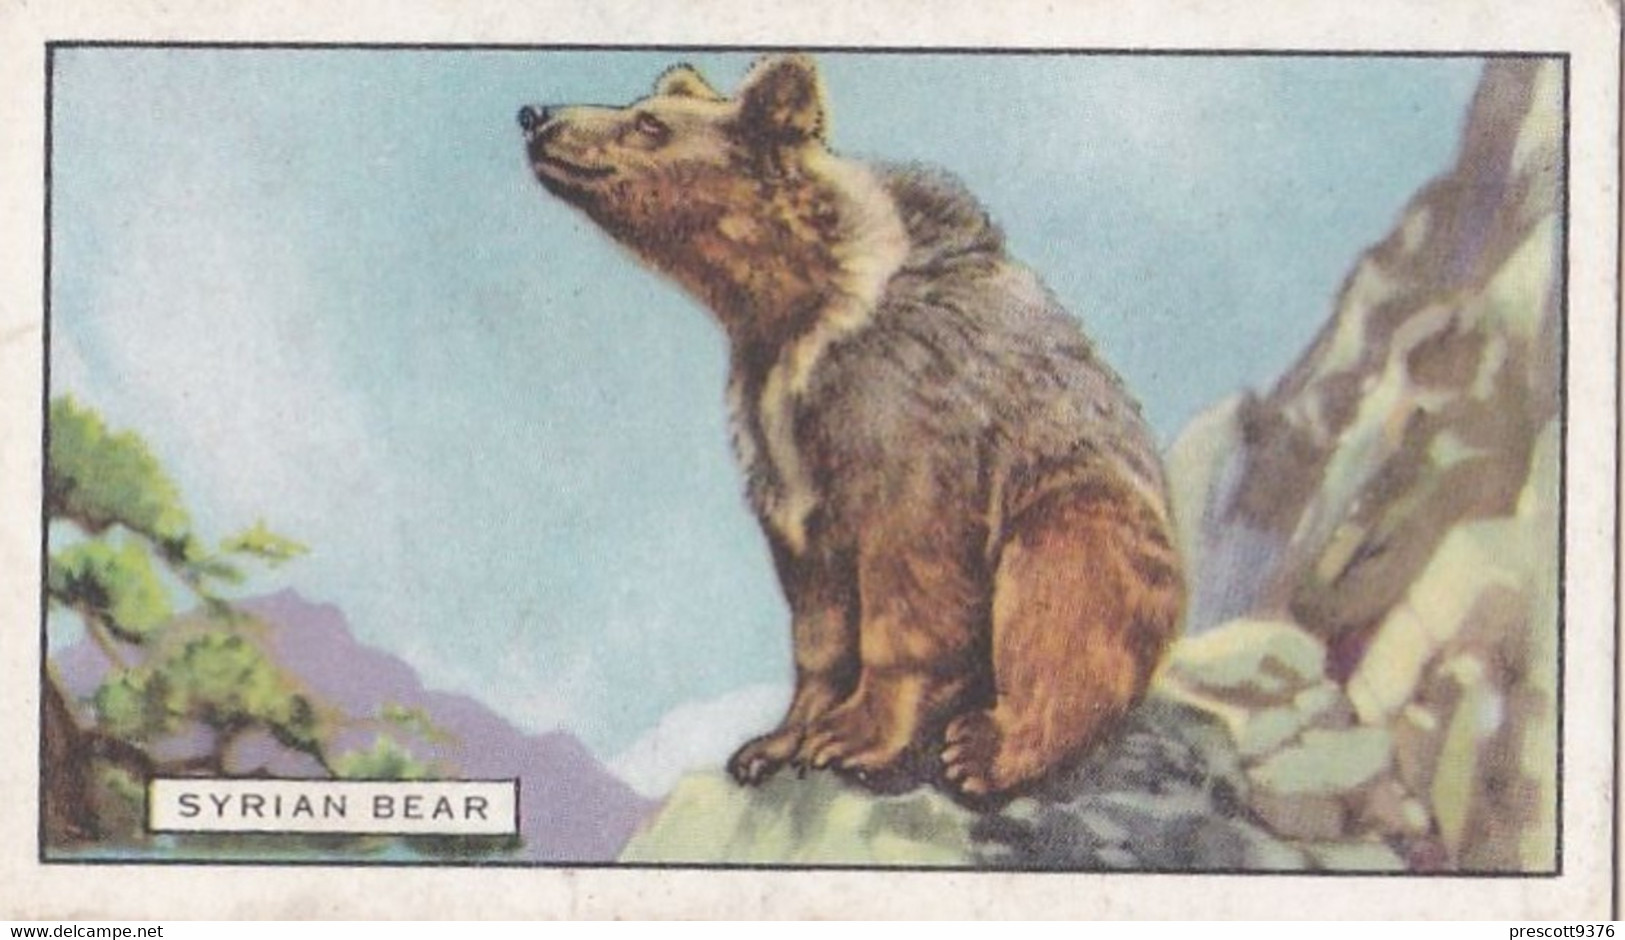 Wild Animals 1937 - 40 Syrian Bear - Gallaher Cigarette Card - Original - - Gallaher